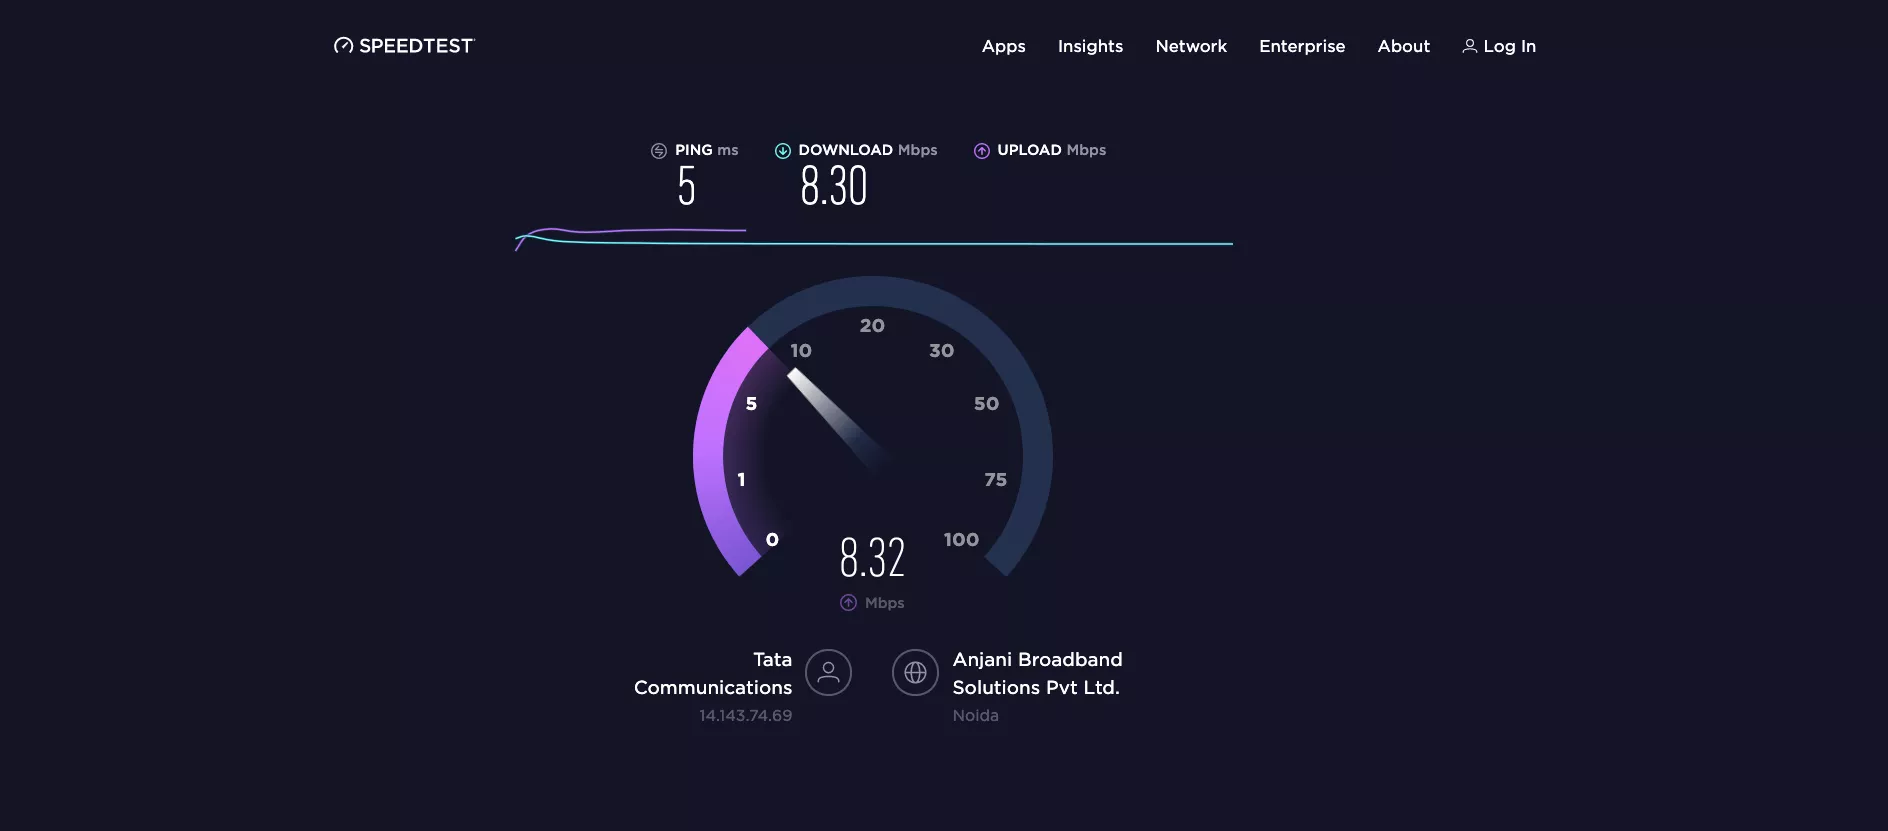 my internet speed by ookla